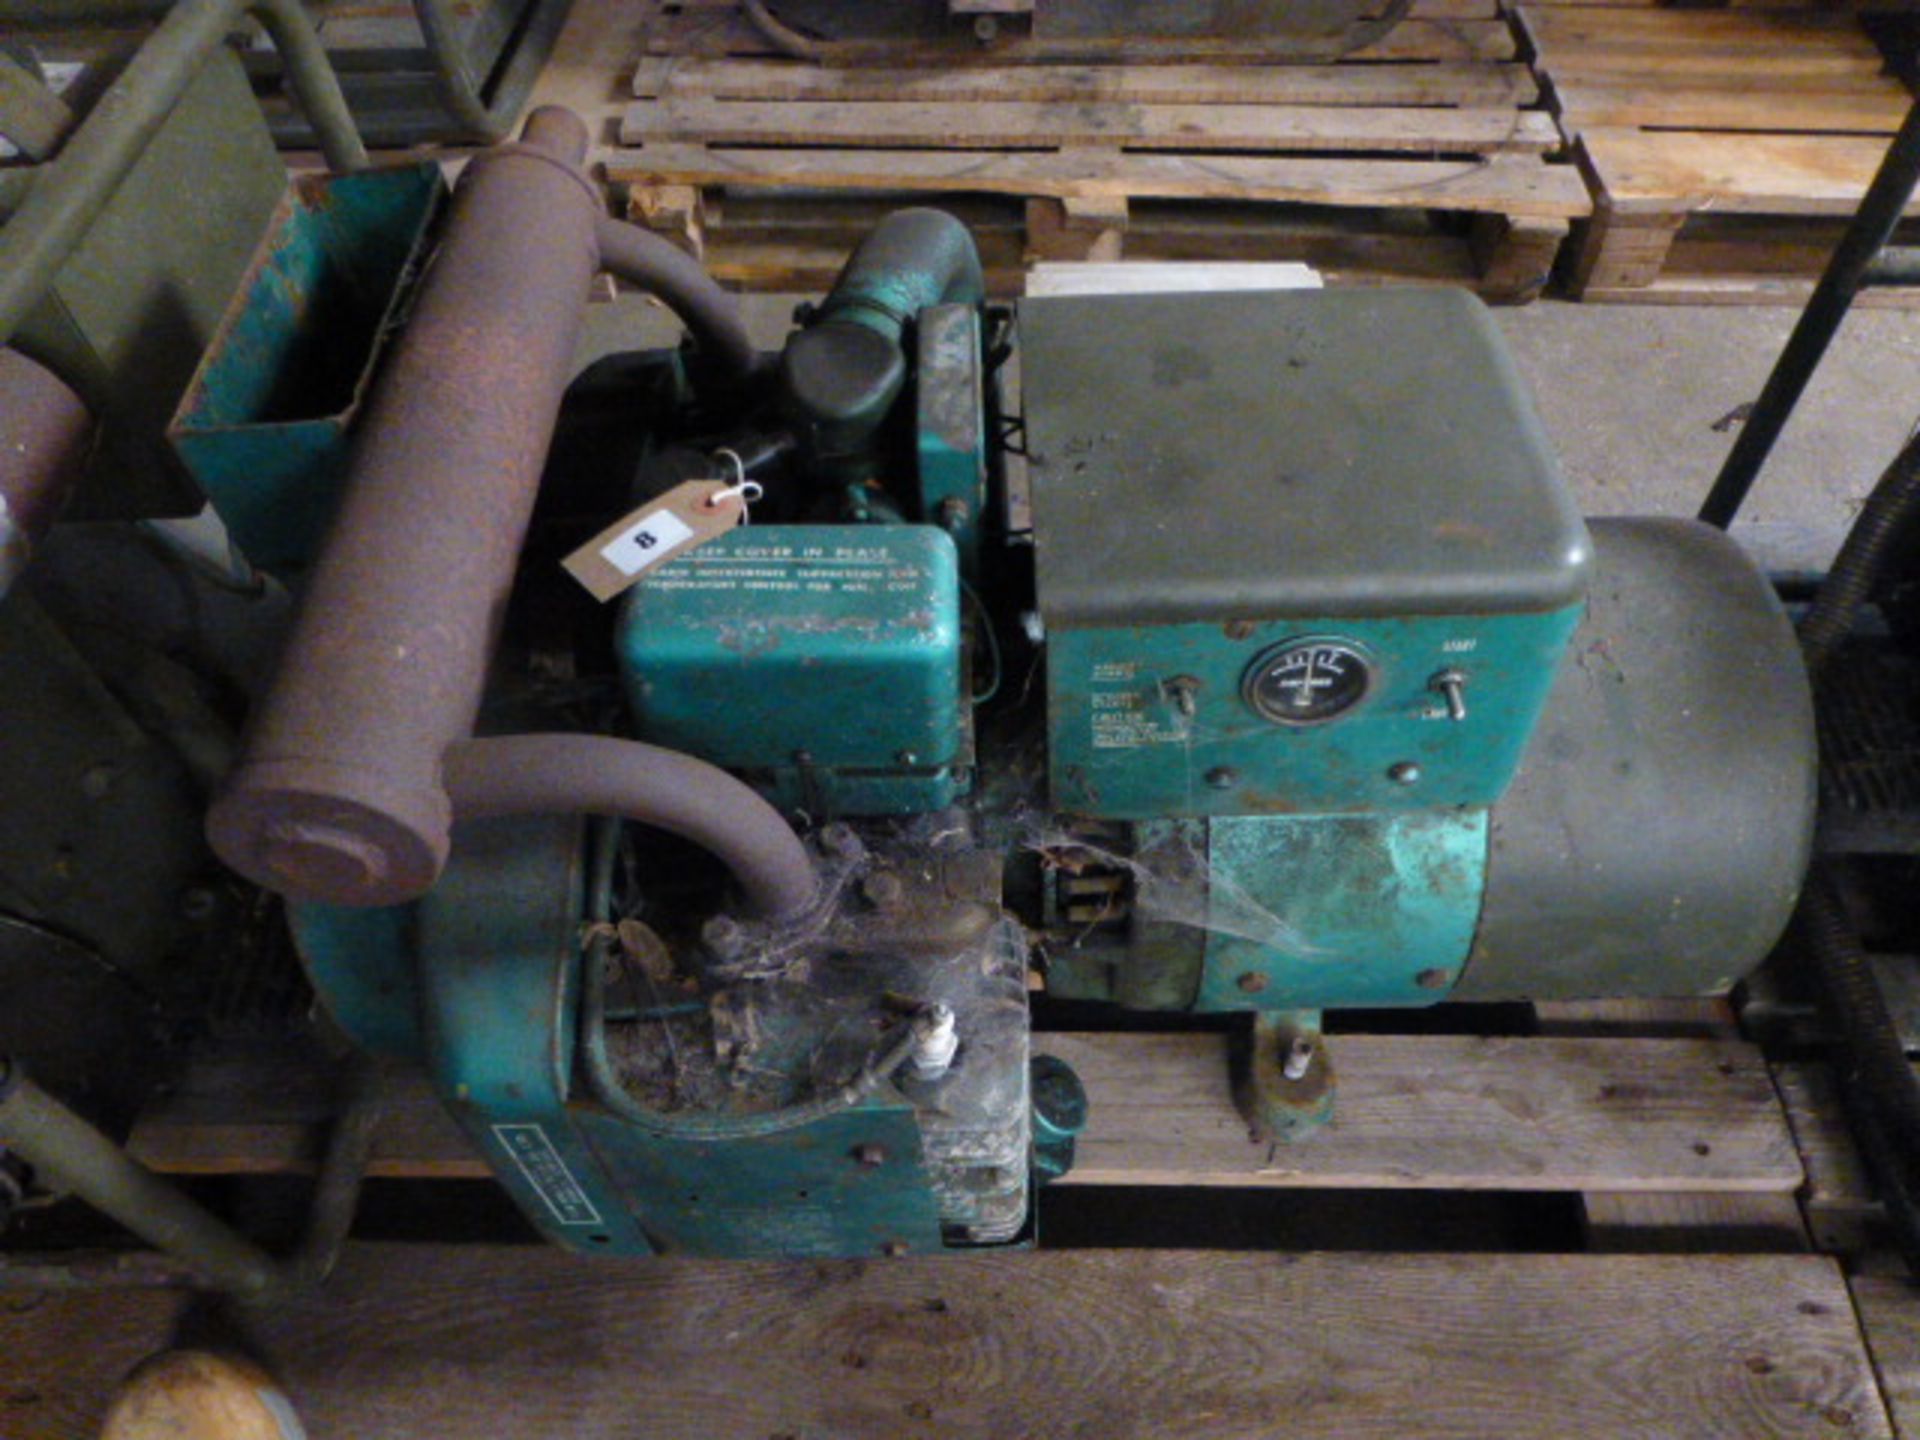 Onan electric generator set Model 3.5CCK/53 3.5kw with petrol engine